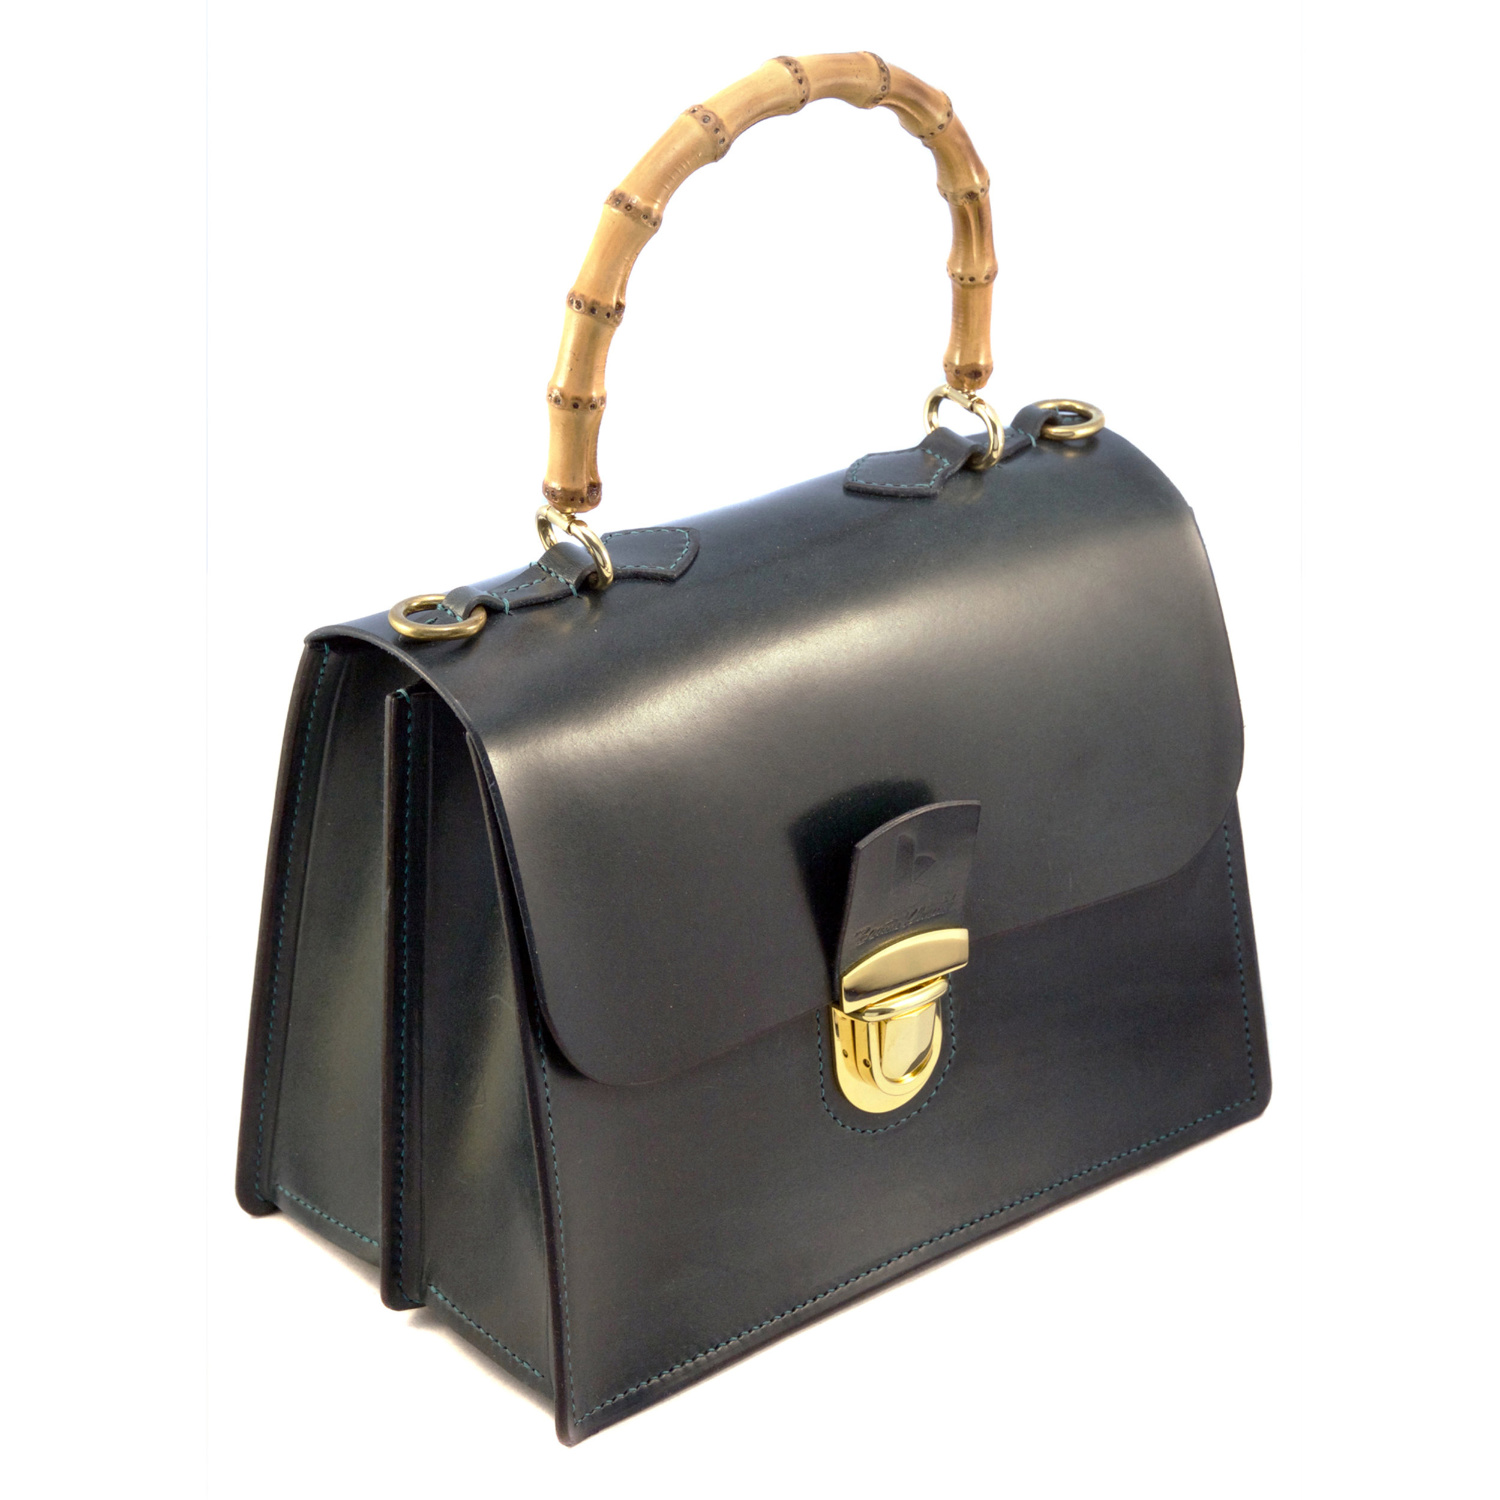 leather handbag with bamboo handle